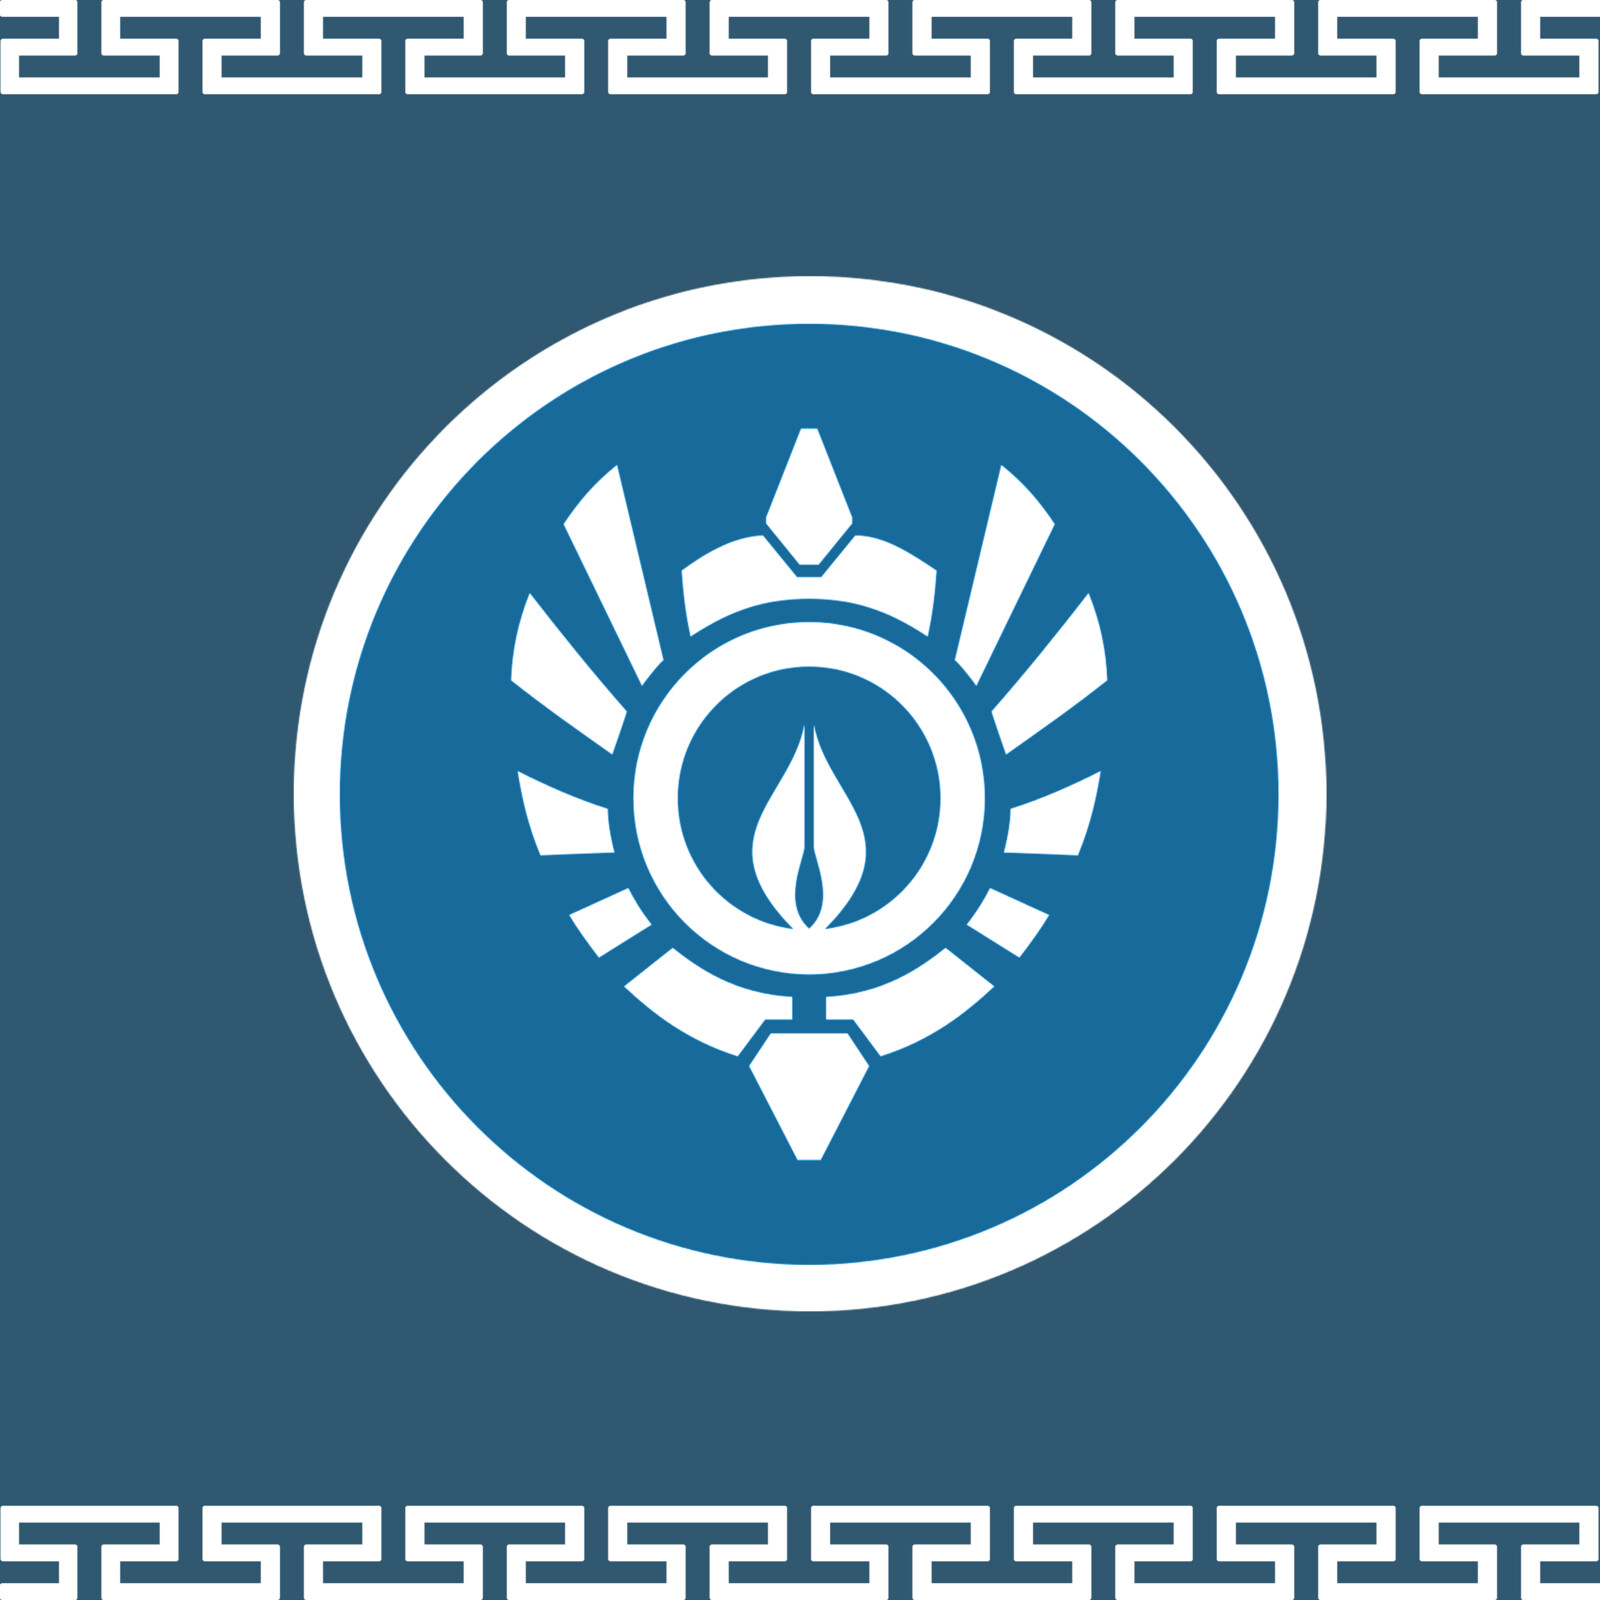 Flag for the Kingdom of Mistral